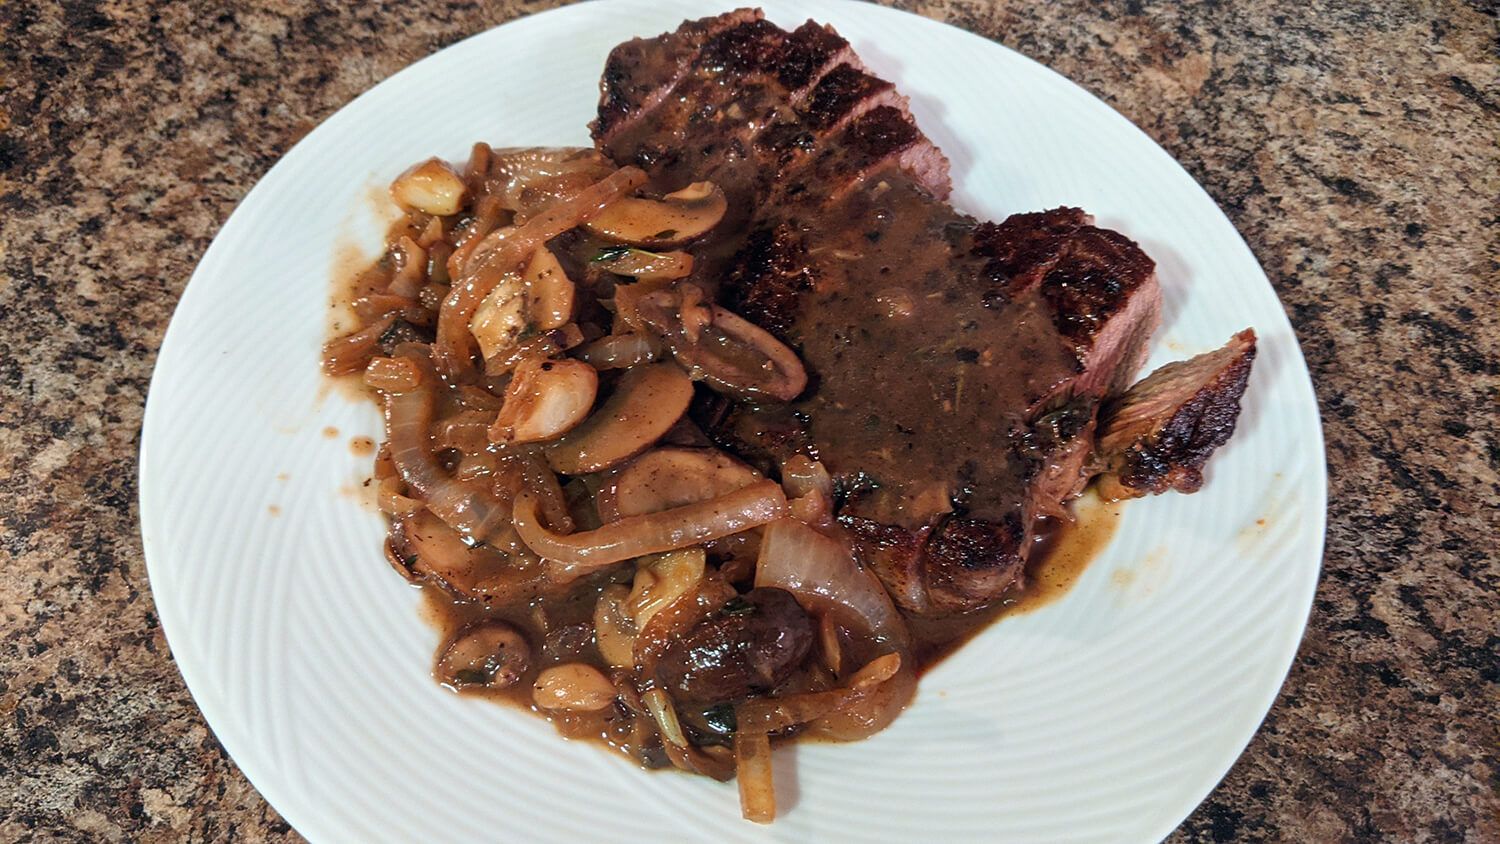 12. Steak with Pan Sauce, Mushrooms, & Onion